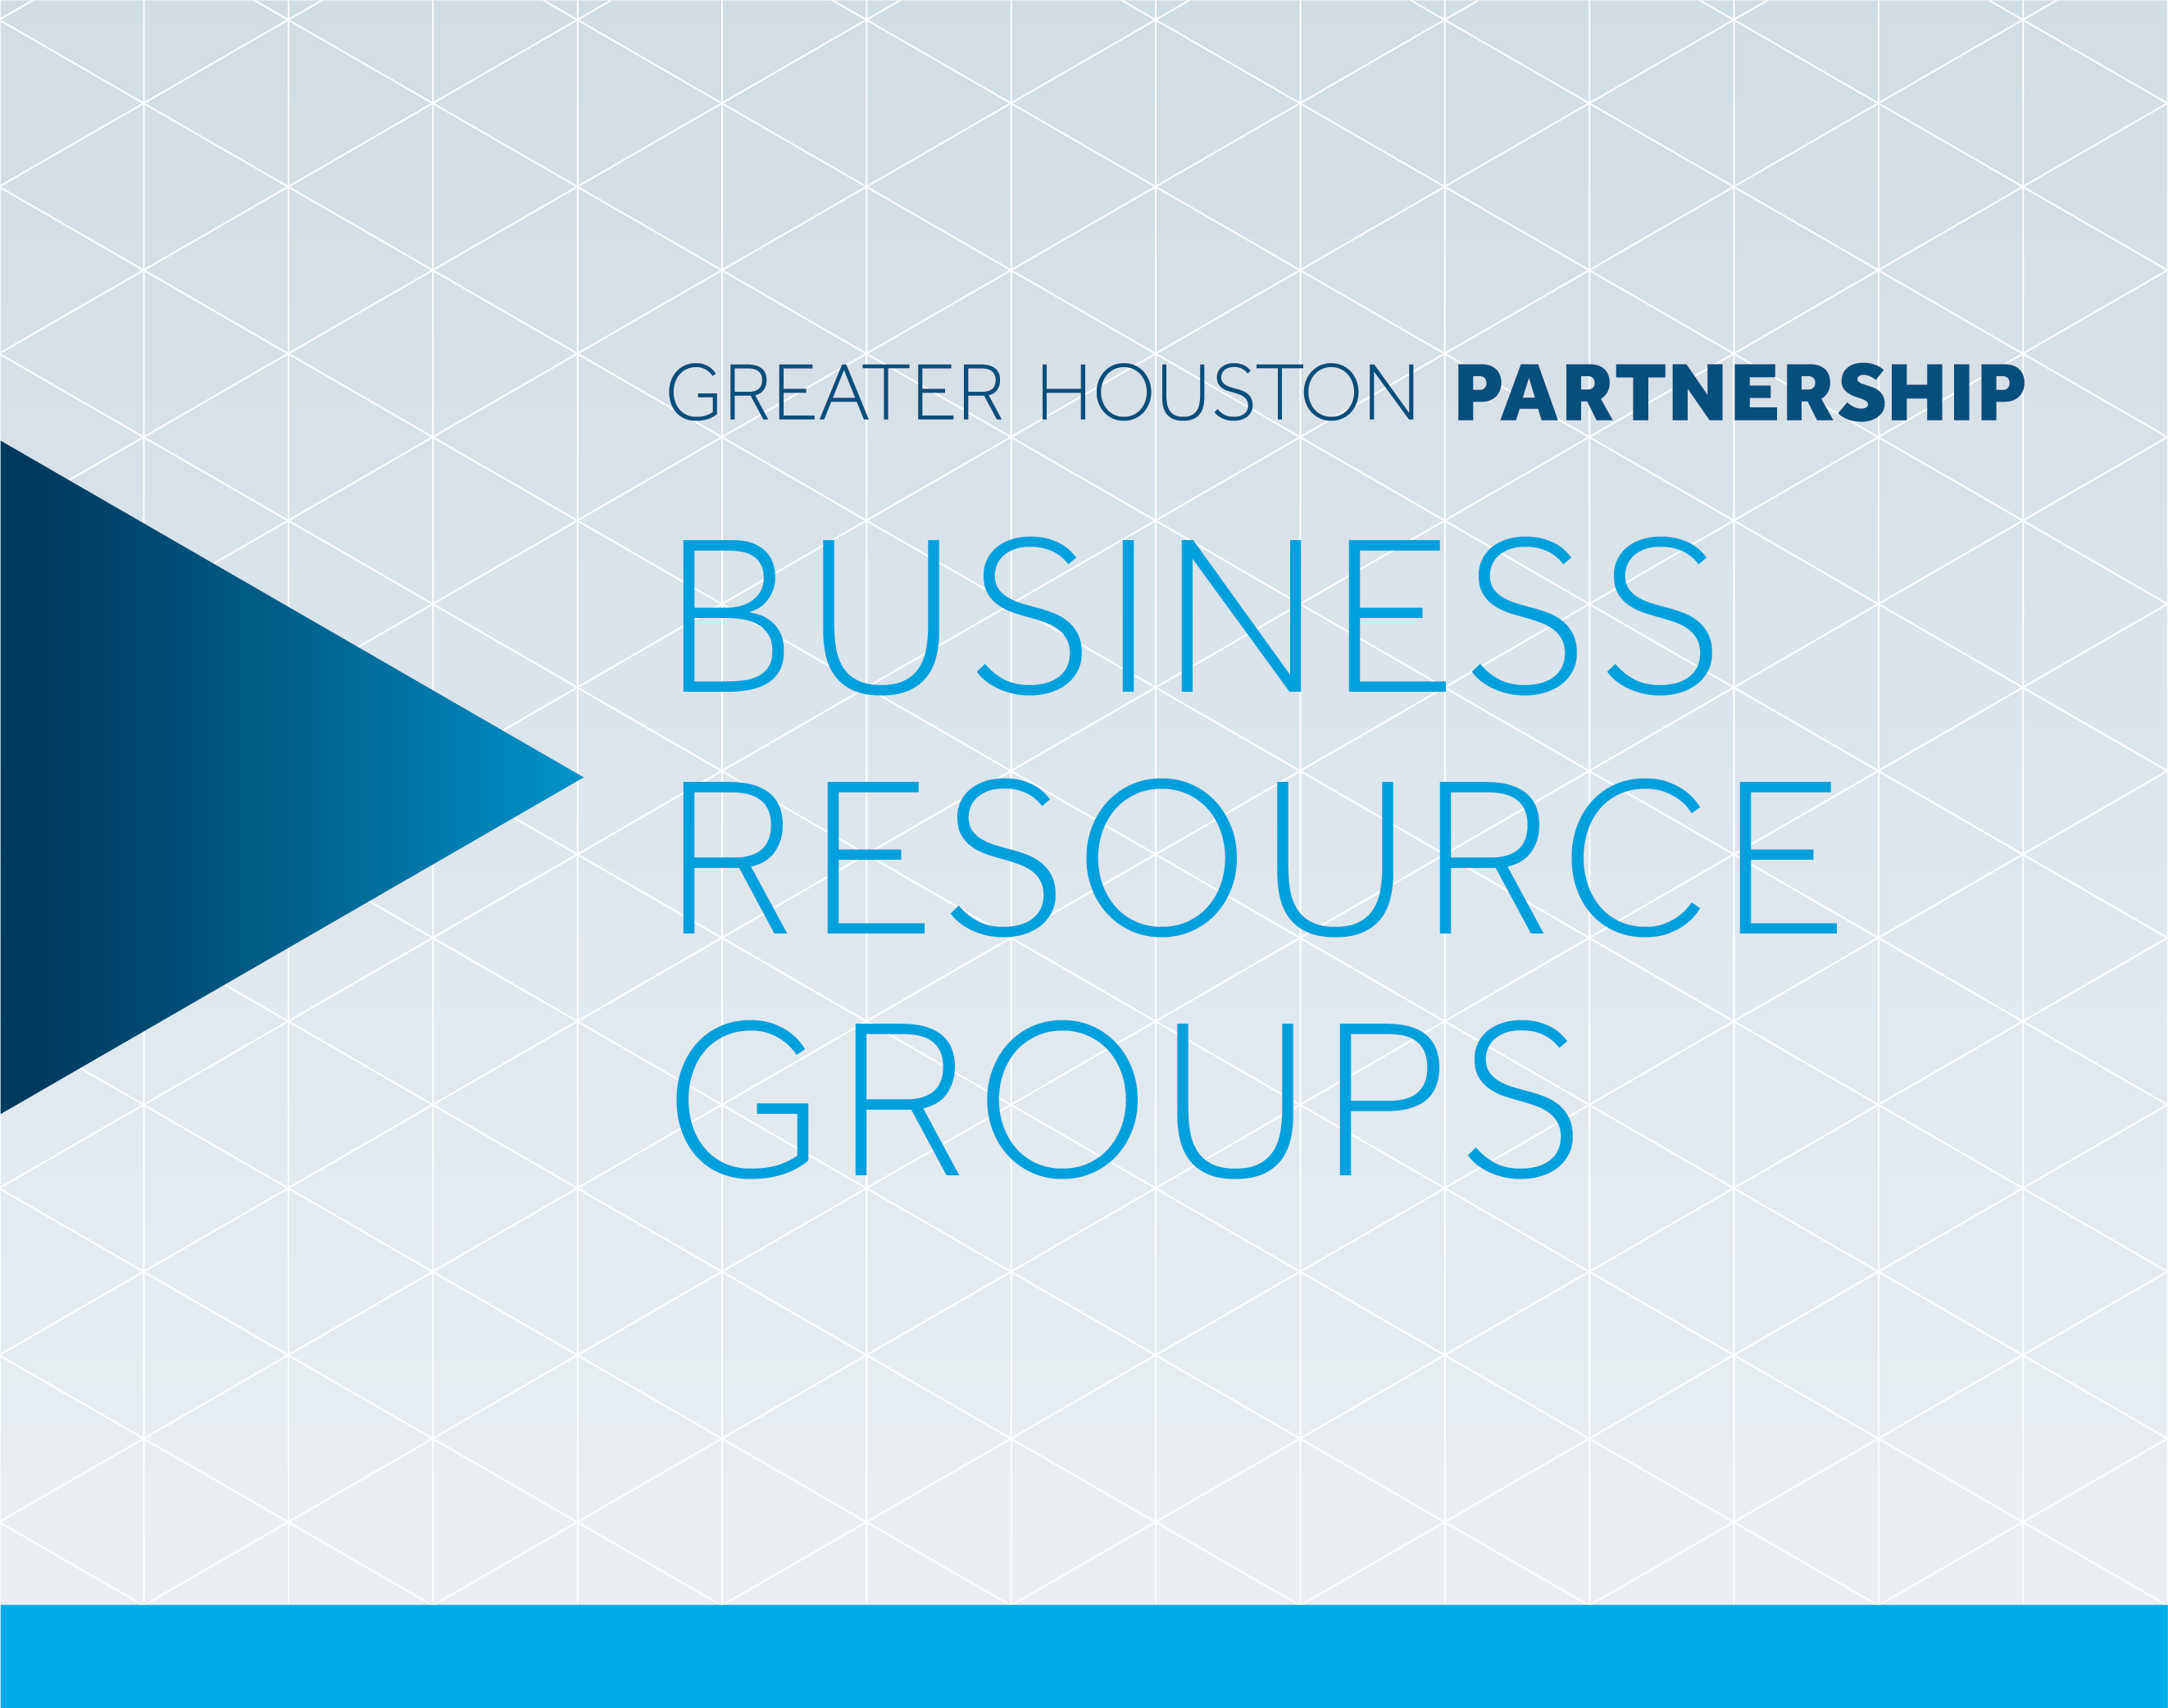 Partnership Business Resource Groups